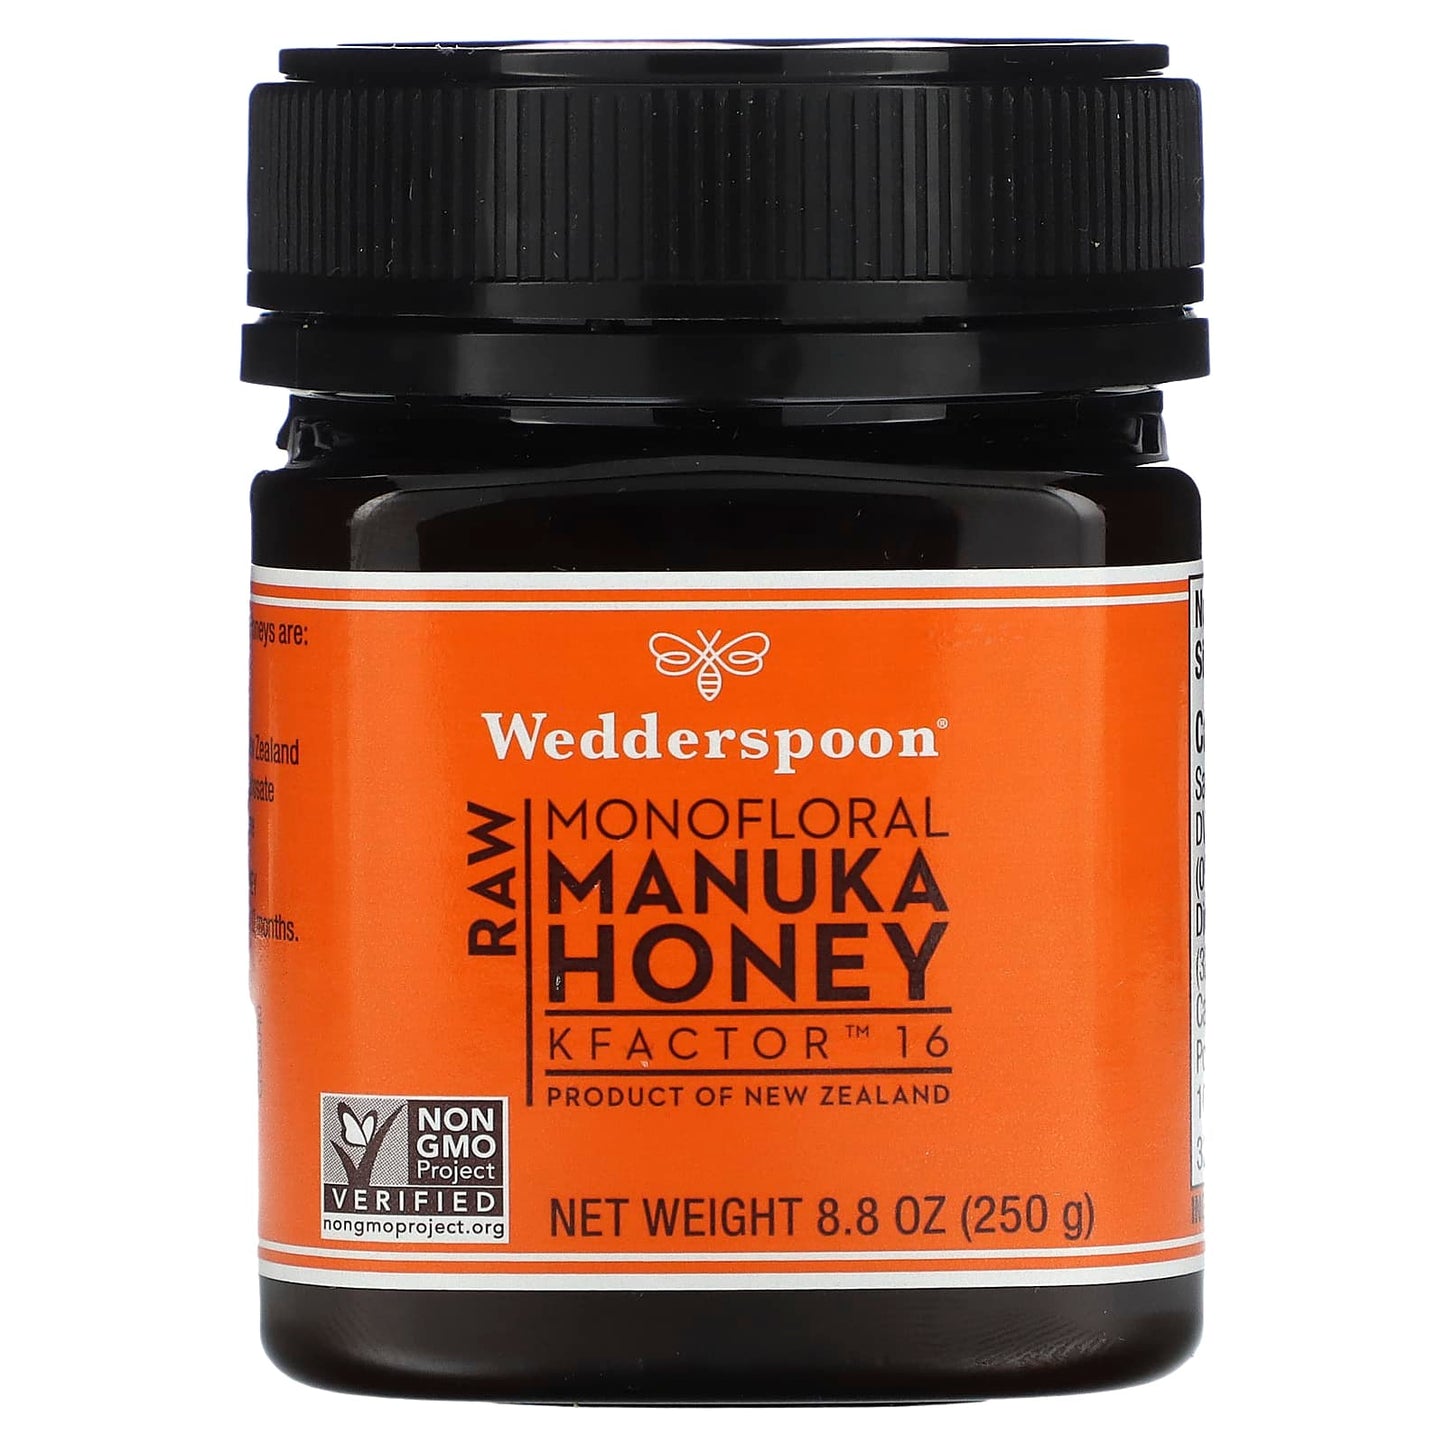 Wedderspoon-Raw Monofloral Manuka Honey-KFactor 16-8.8 oz (250 g)